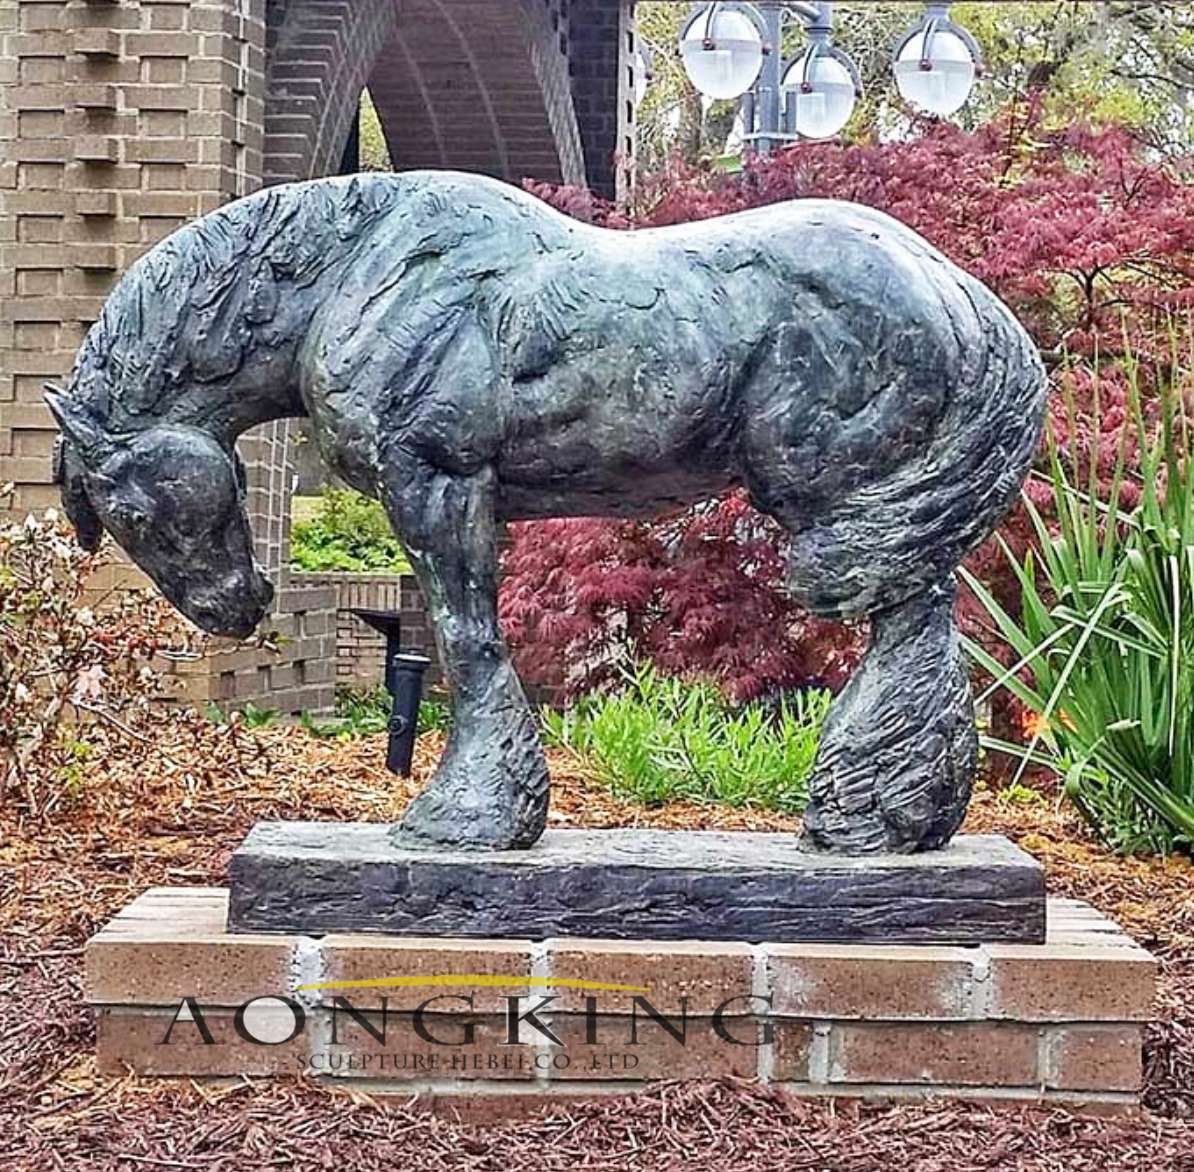 Pony sculpture